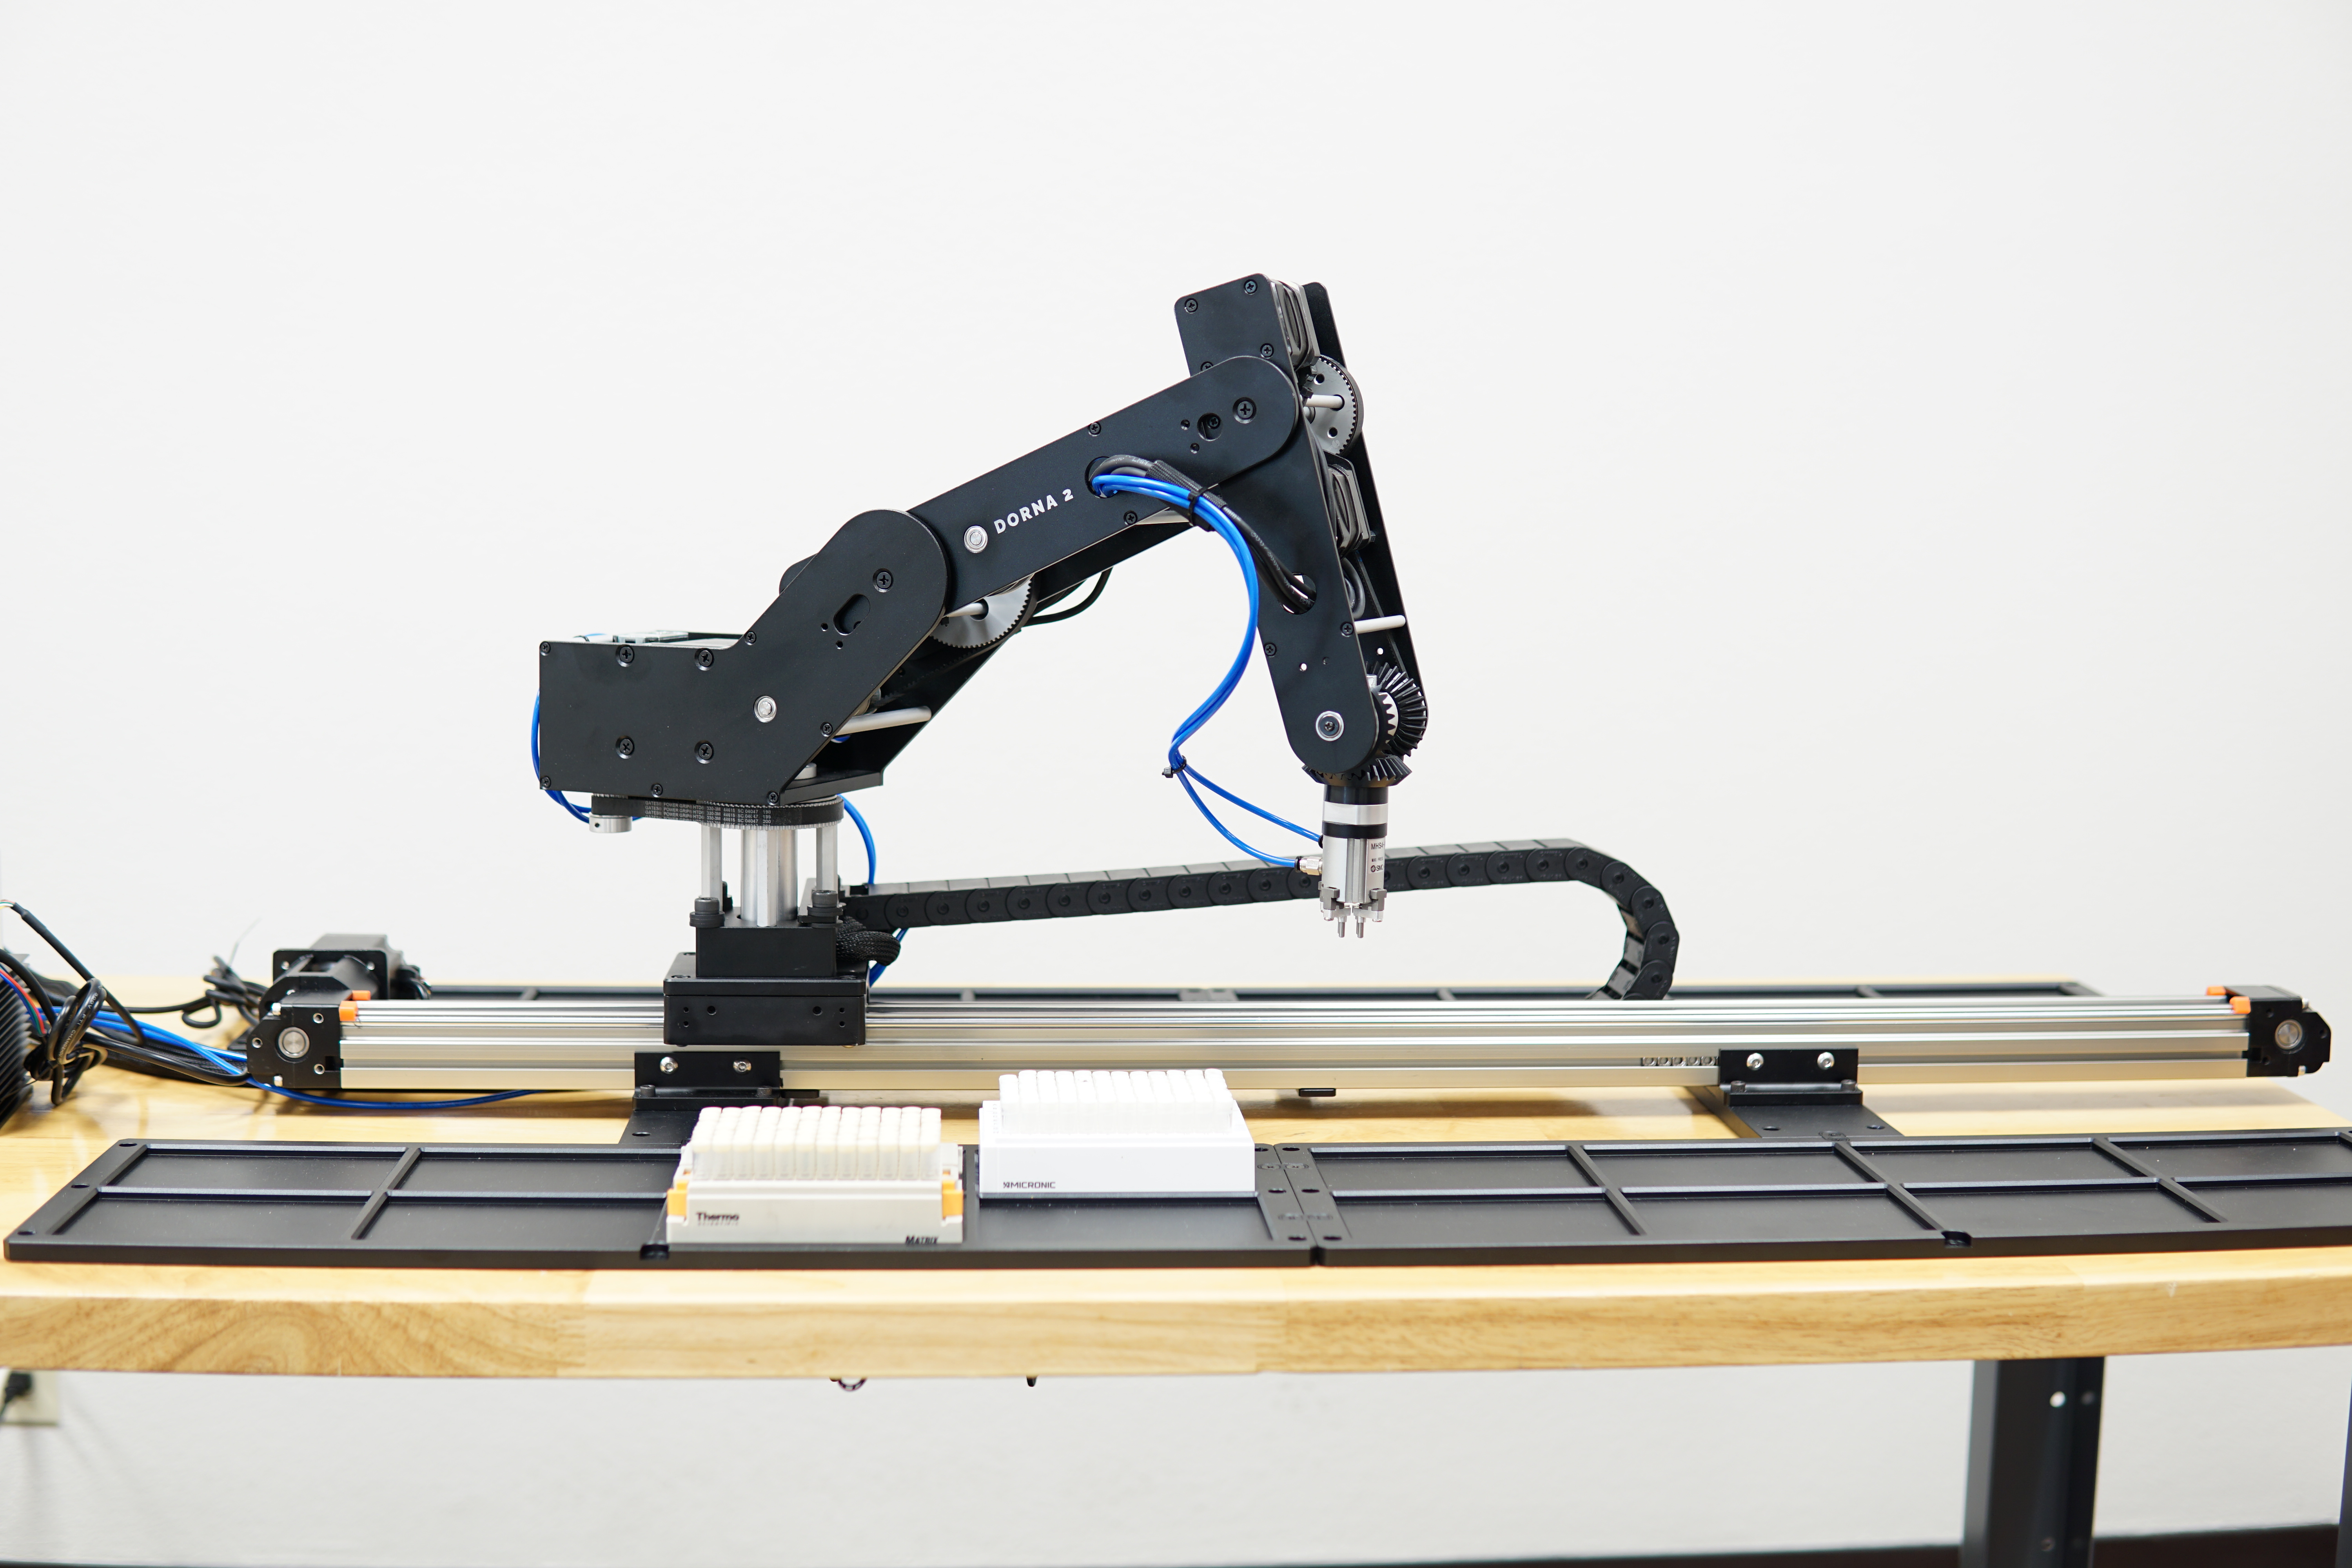 Dorna 2 Robotic Arm rested on an auxiliary axe performing tasks.